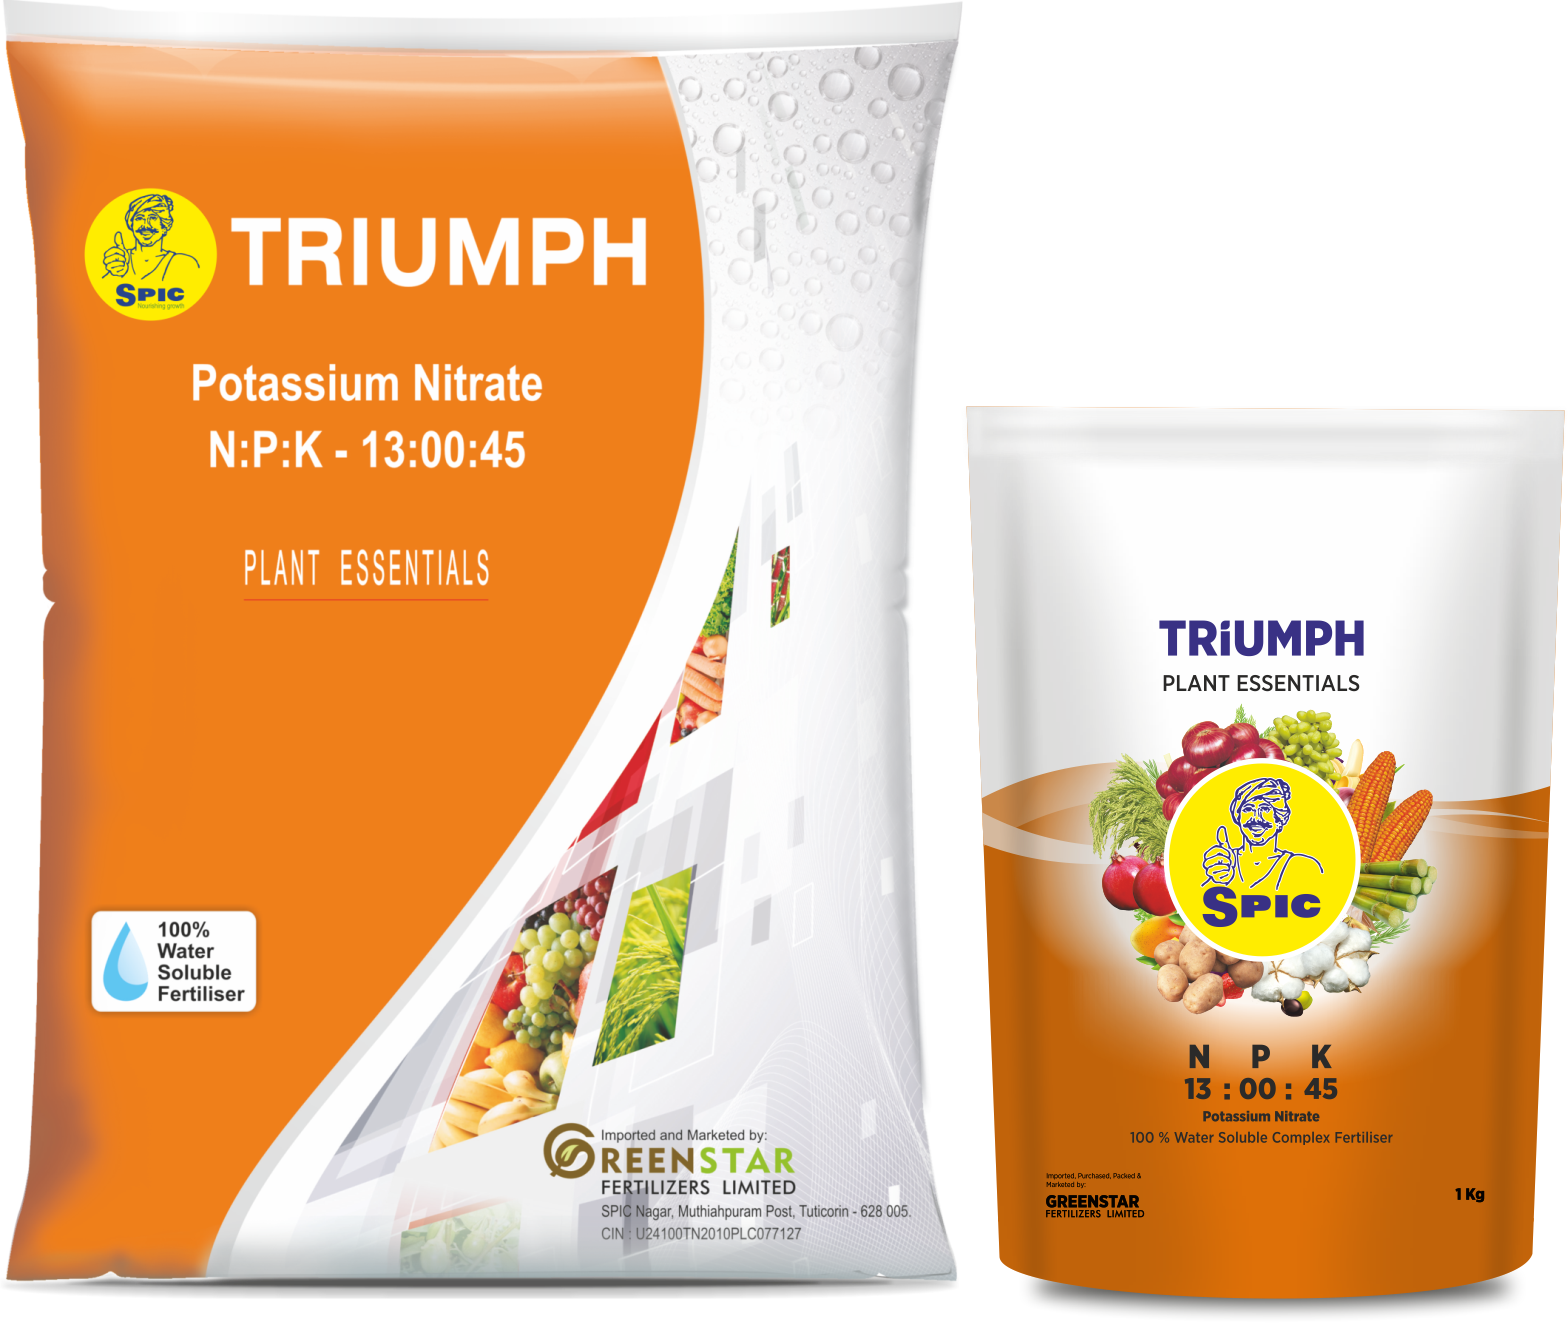 SPIC Triumph (NPK 13 00 45) Pottassium Nitrate